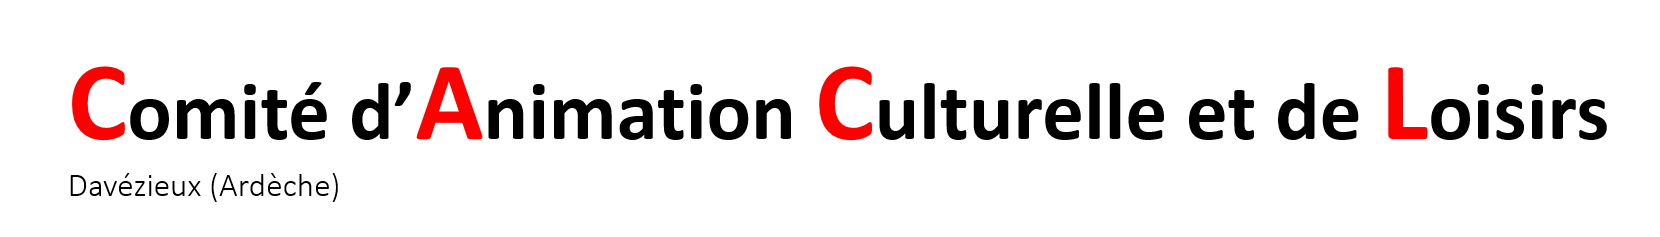 Logo piedpage cl01 1